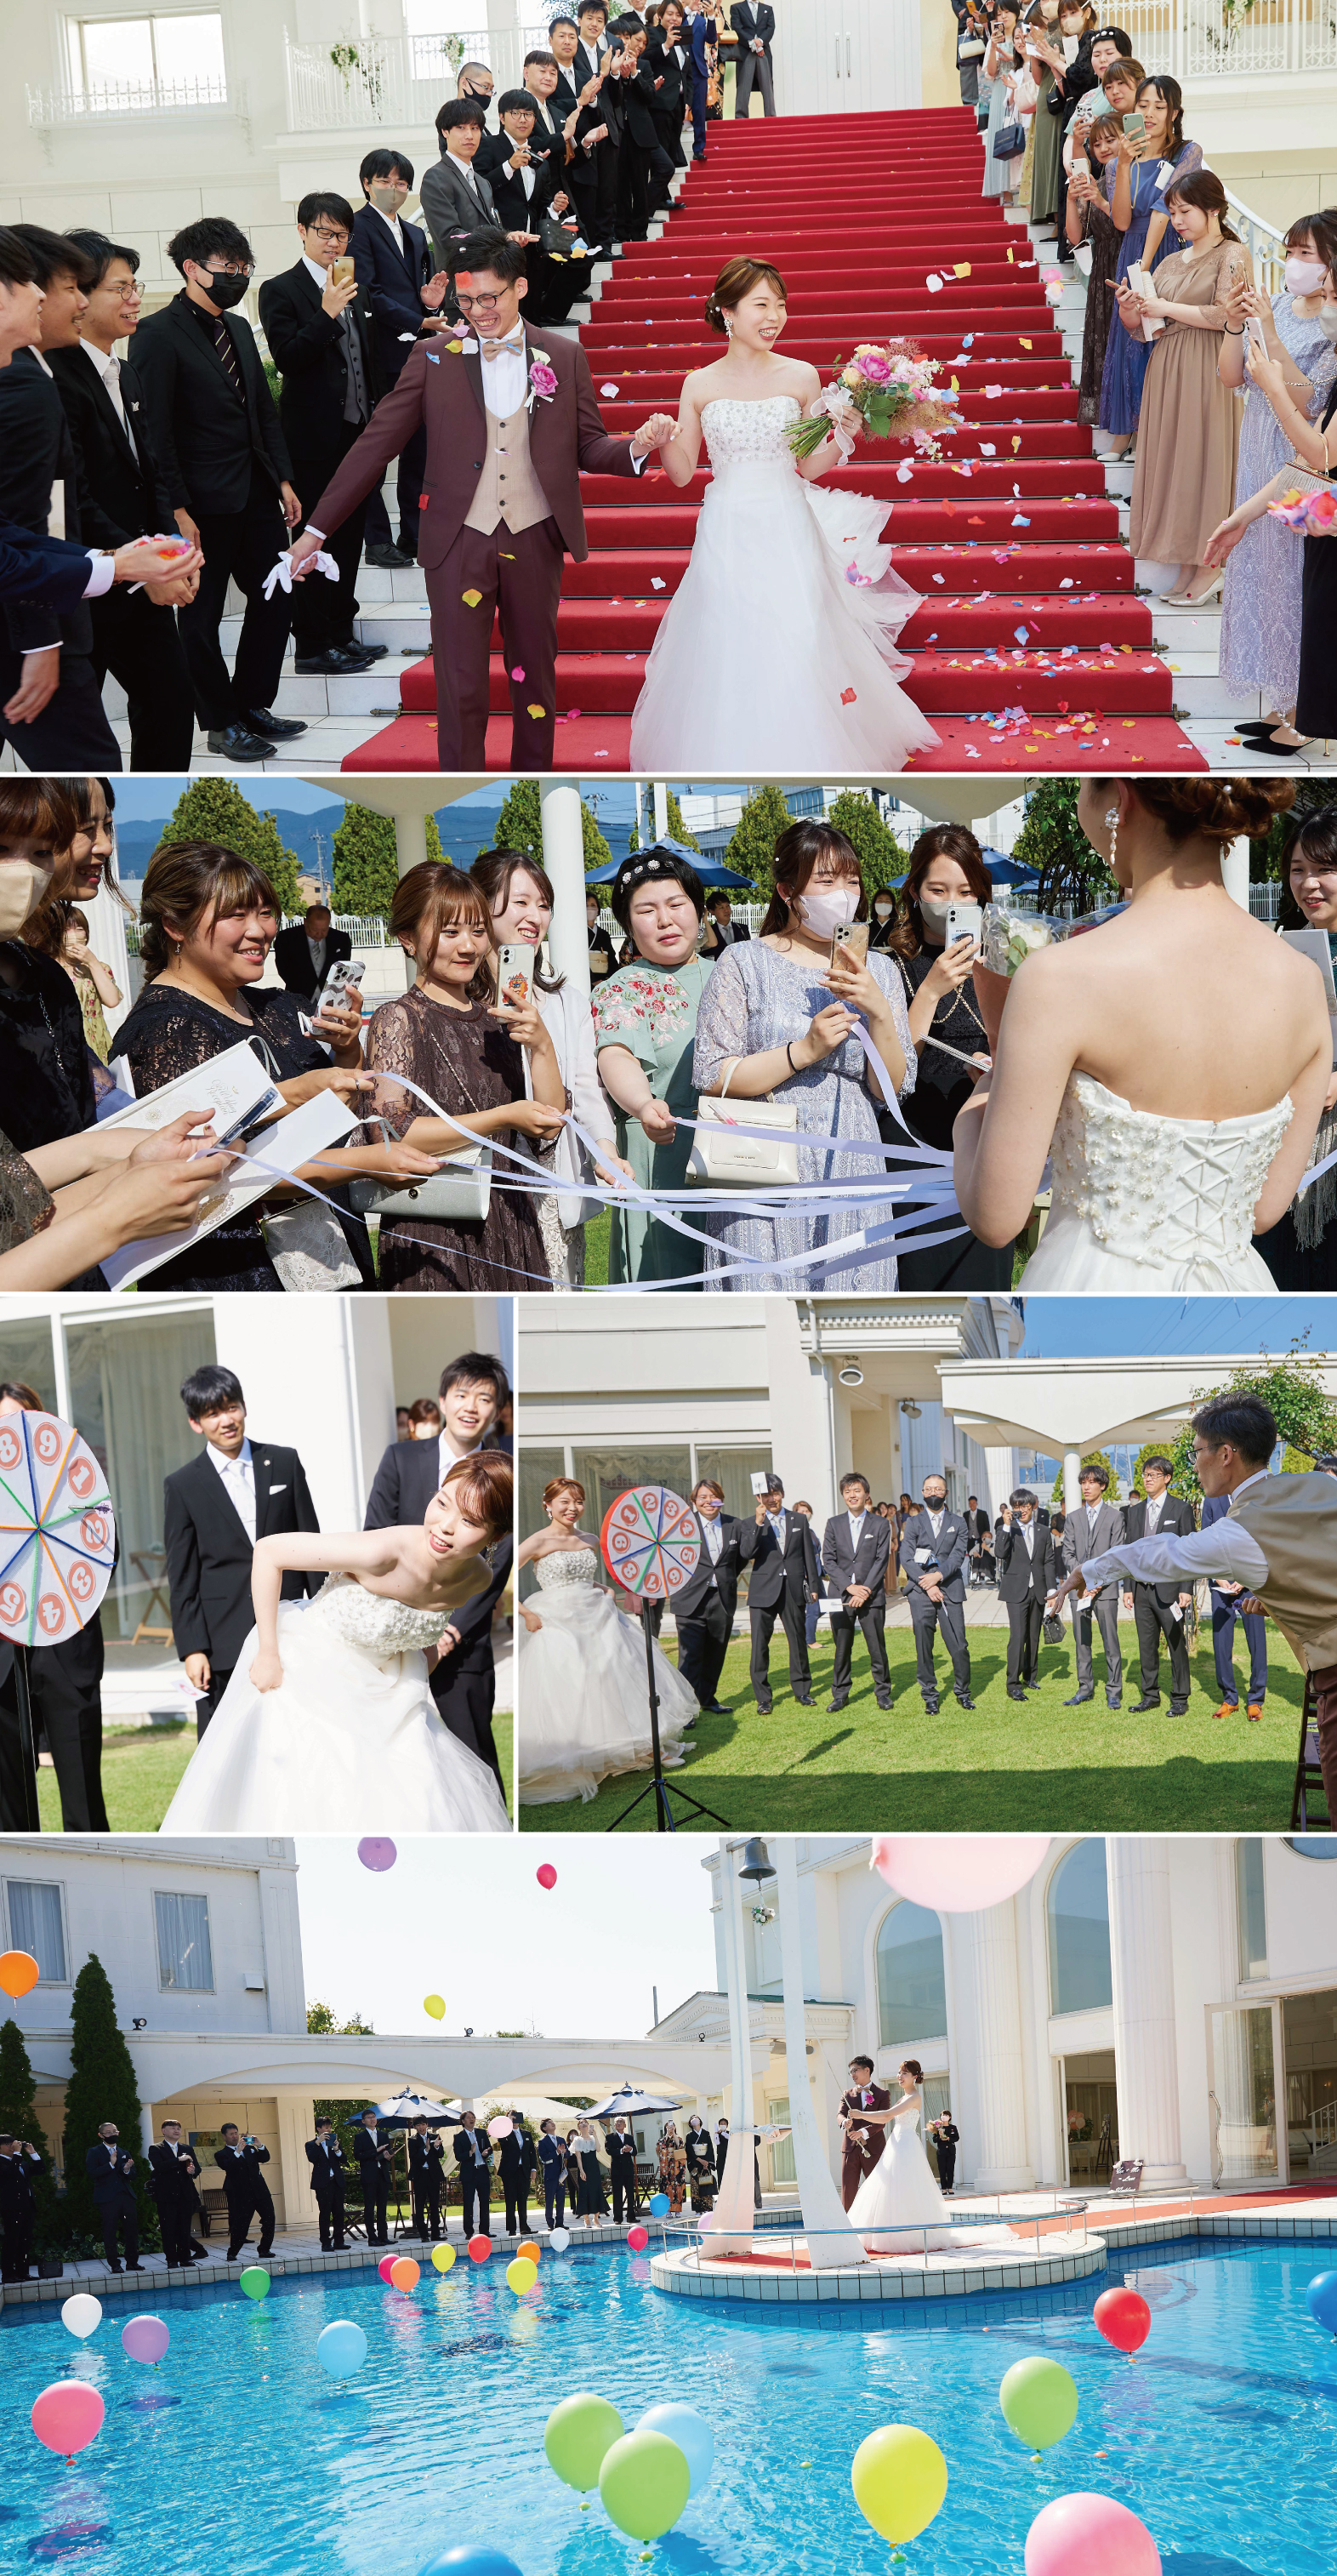 Takuma様とMiki様の結婚式inア・ヴェール・ブランシェのガーデンレセプション風景